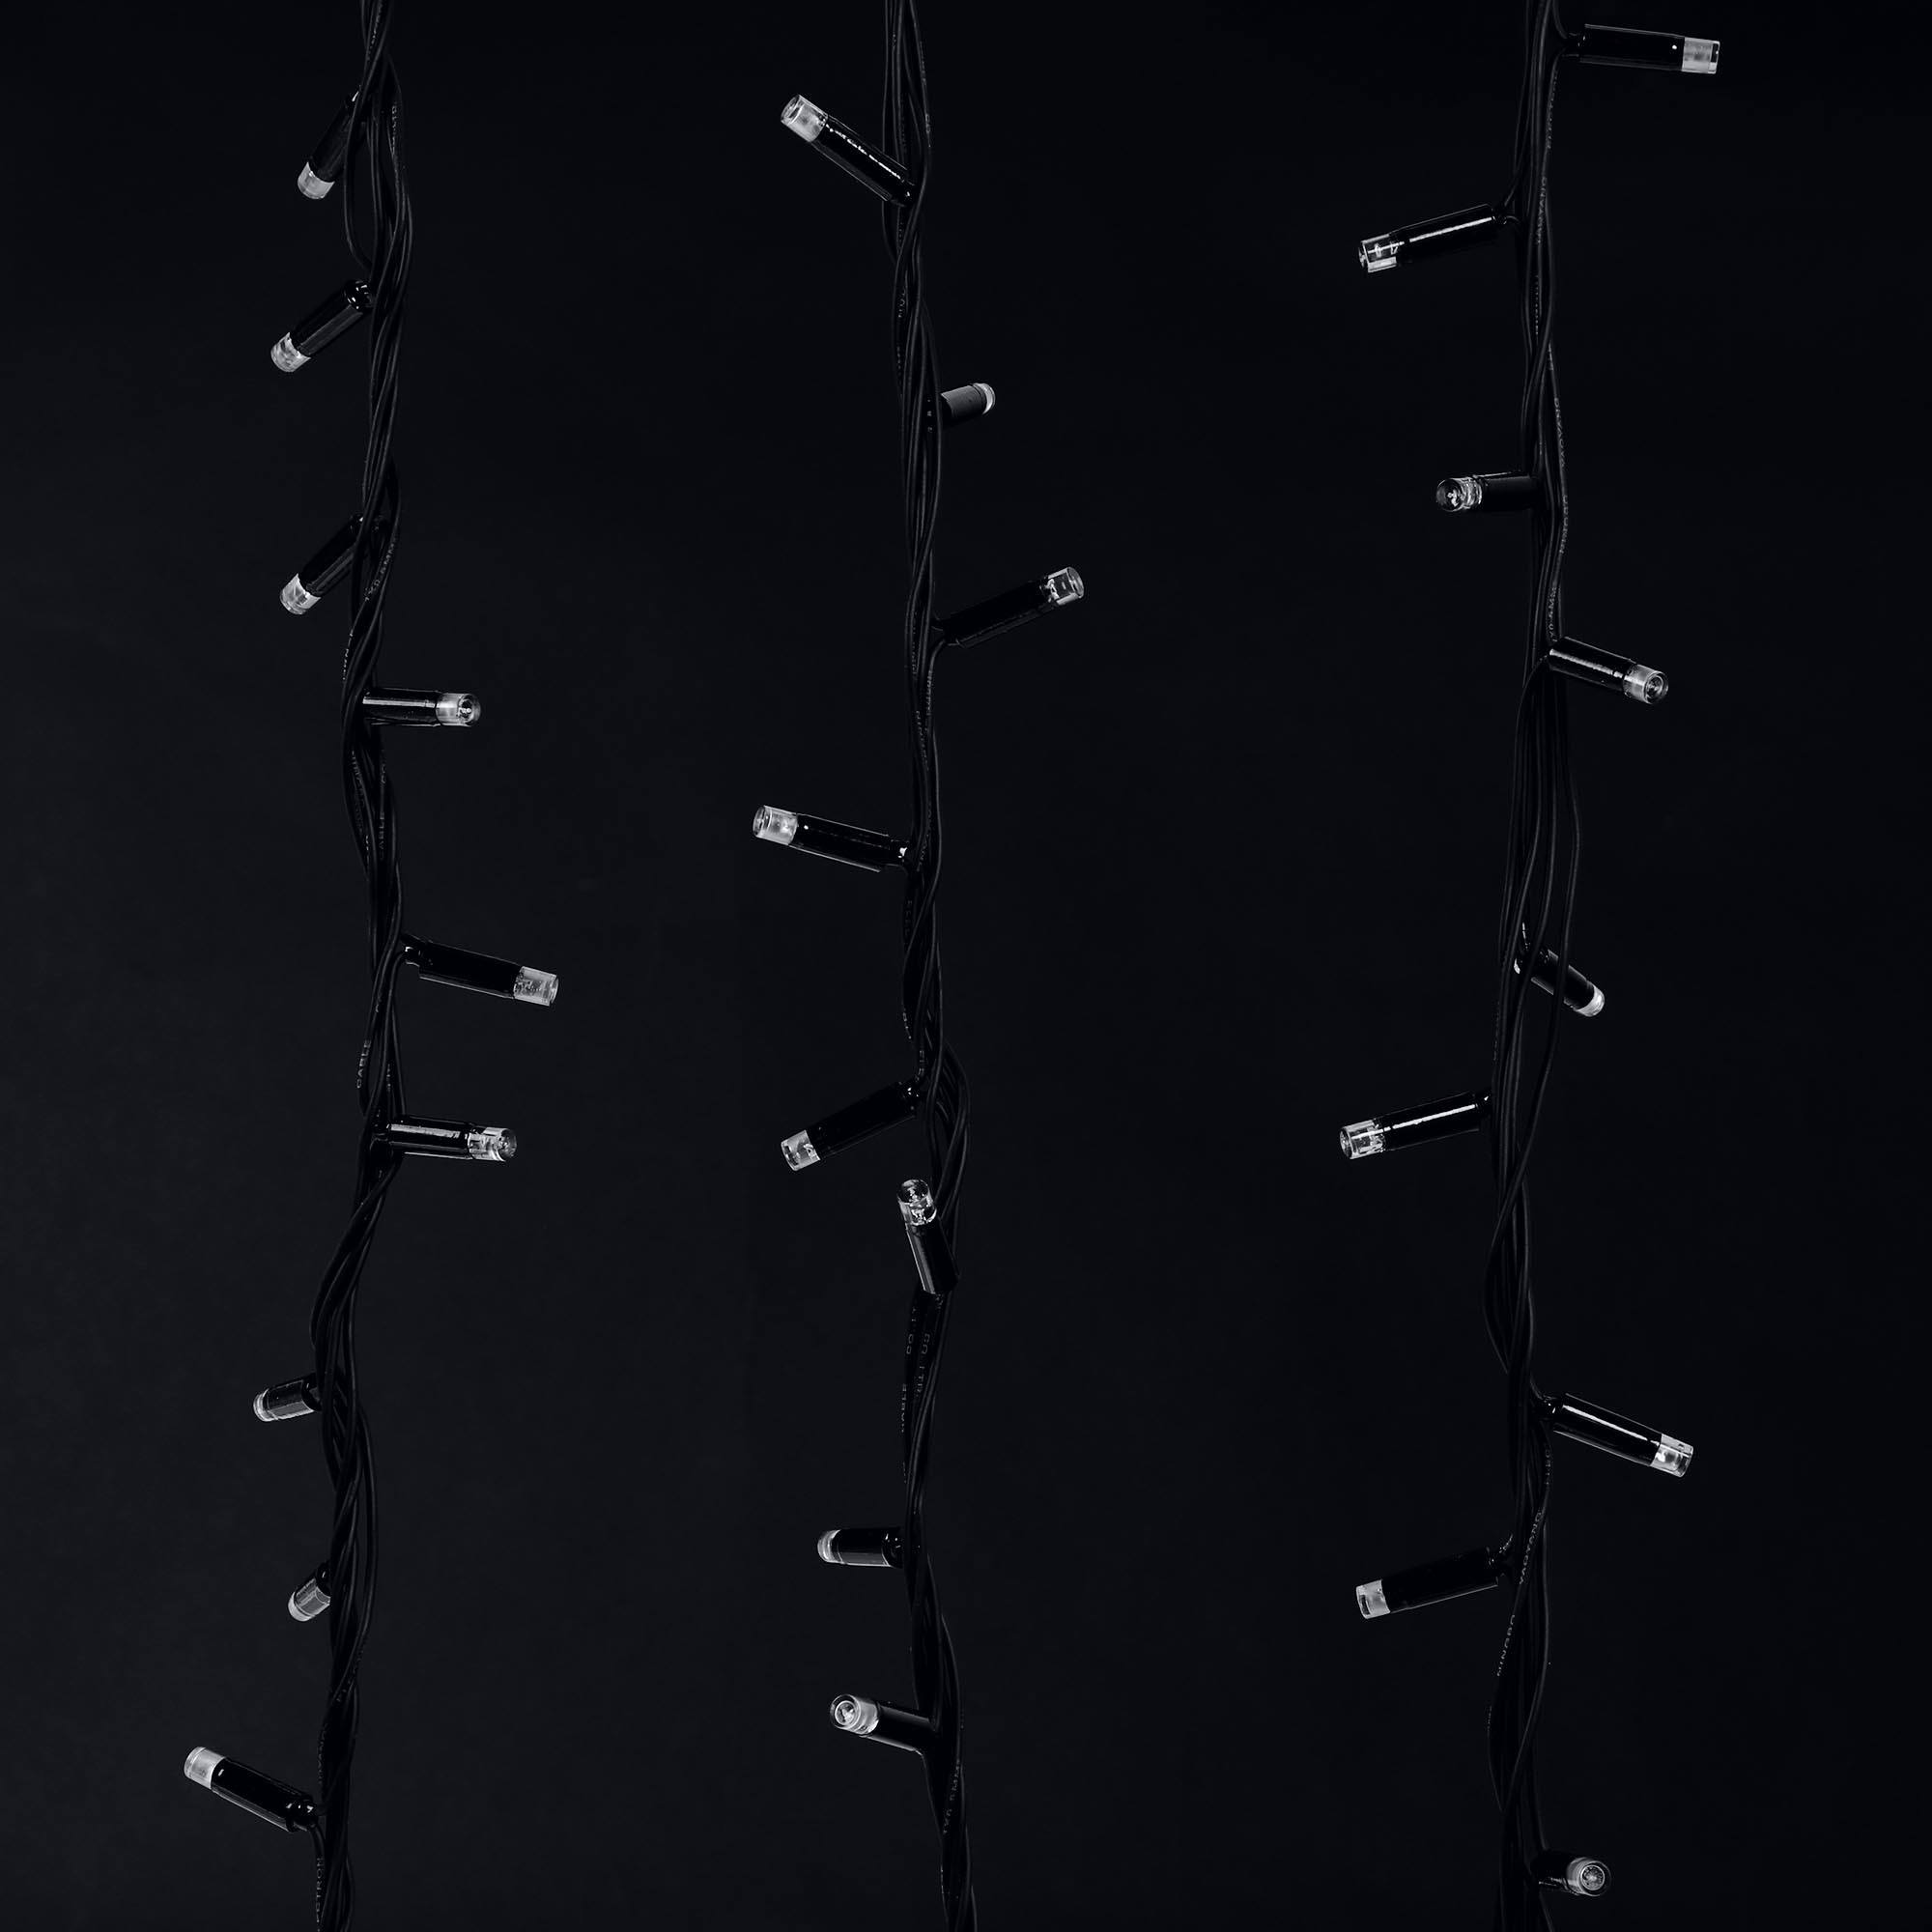 Электрогирлянда уличная Reason 200 LED теплый белый 600х40 см, цвет черный - фото 4